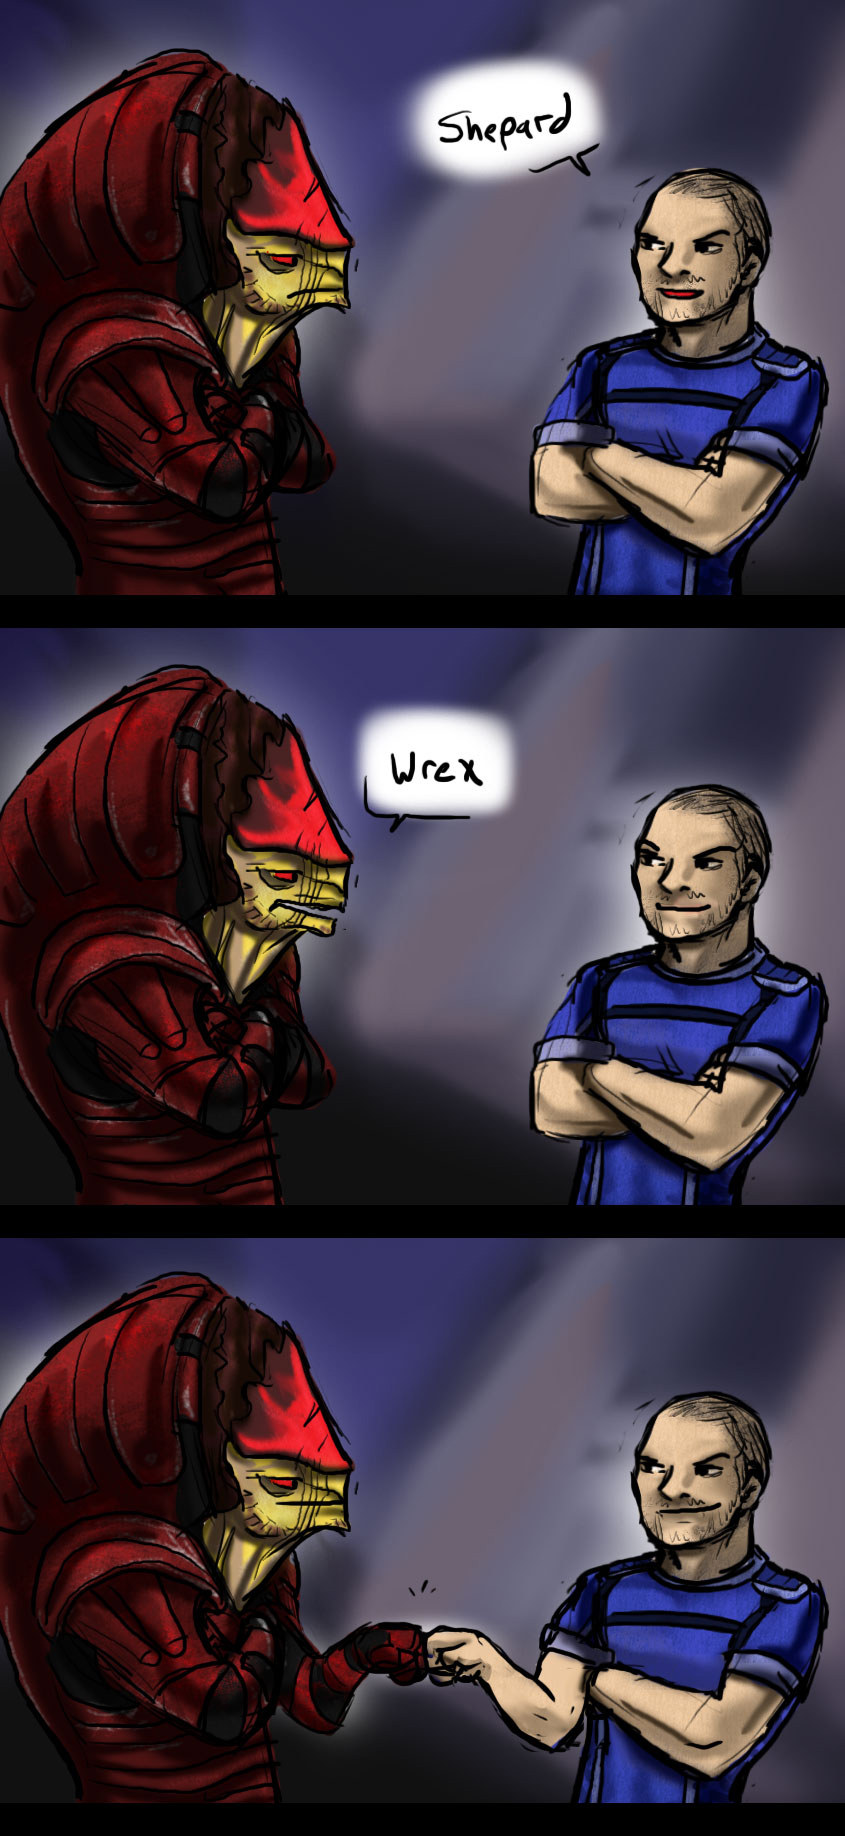 Shepard...Wrex...